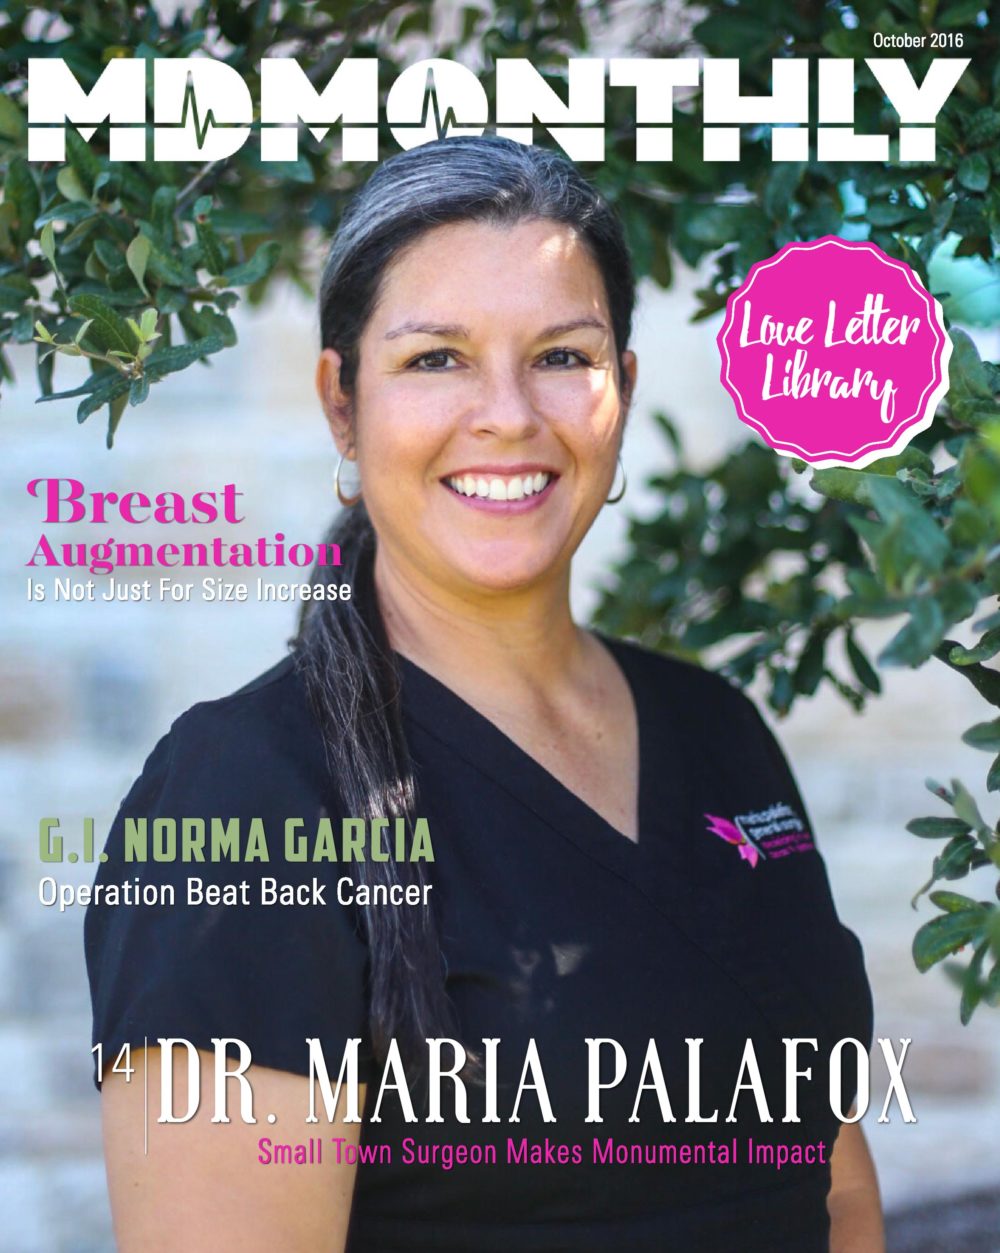 San Antonio’s Dr. Maria Palafox Makes A Monumental Impact For Breast Cancer Care